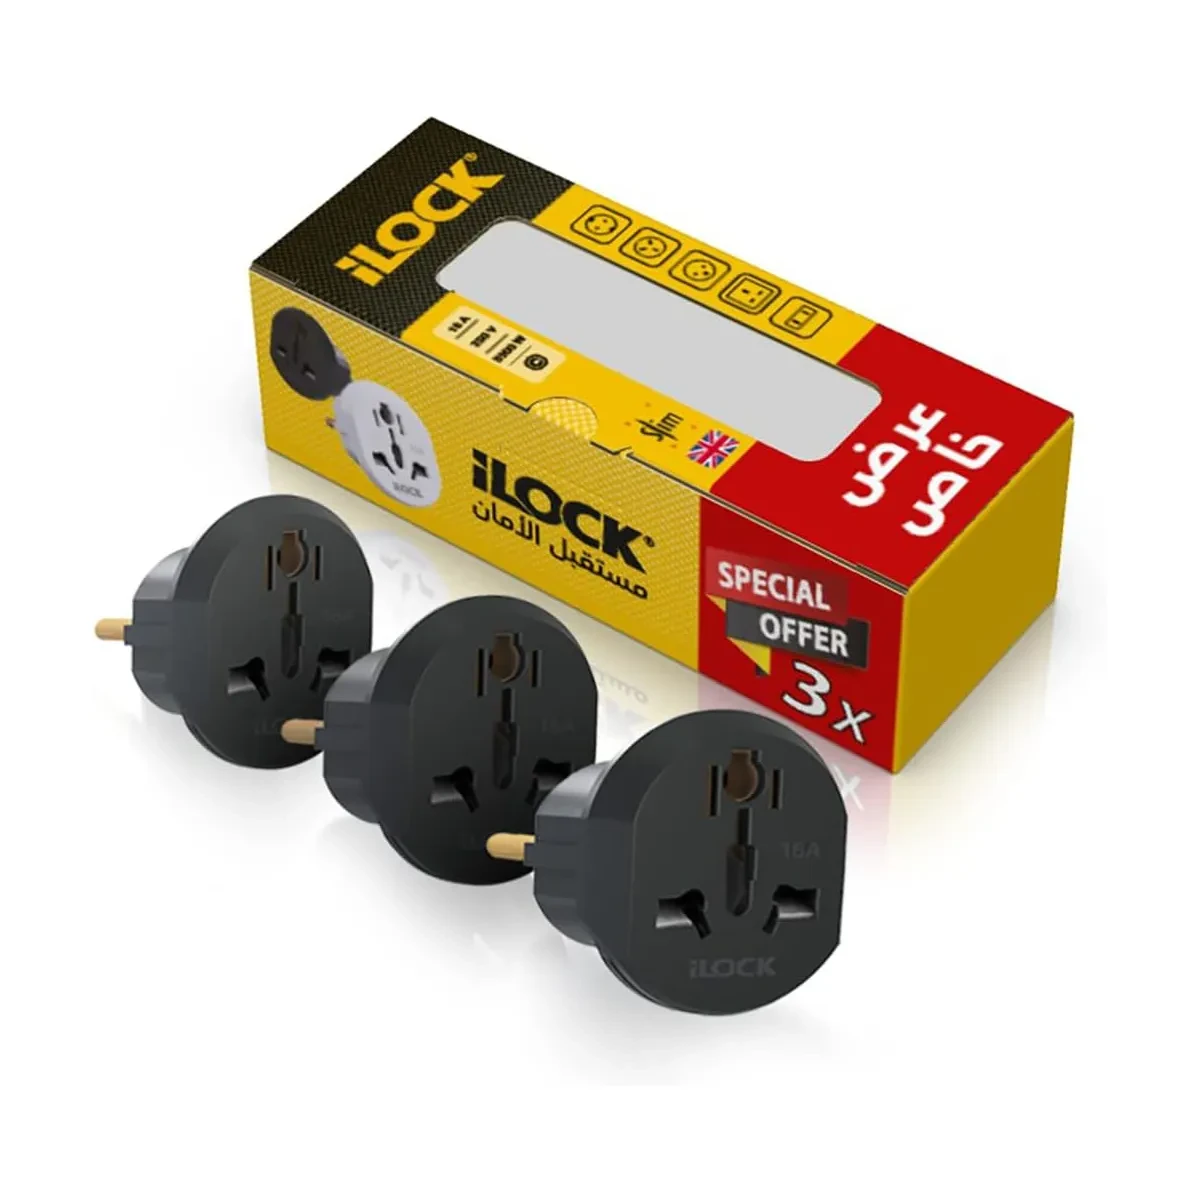 iLock Travel Plug Adapter Converter (Pack 3) - Black "Offer"